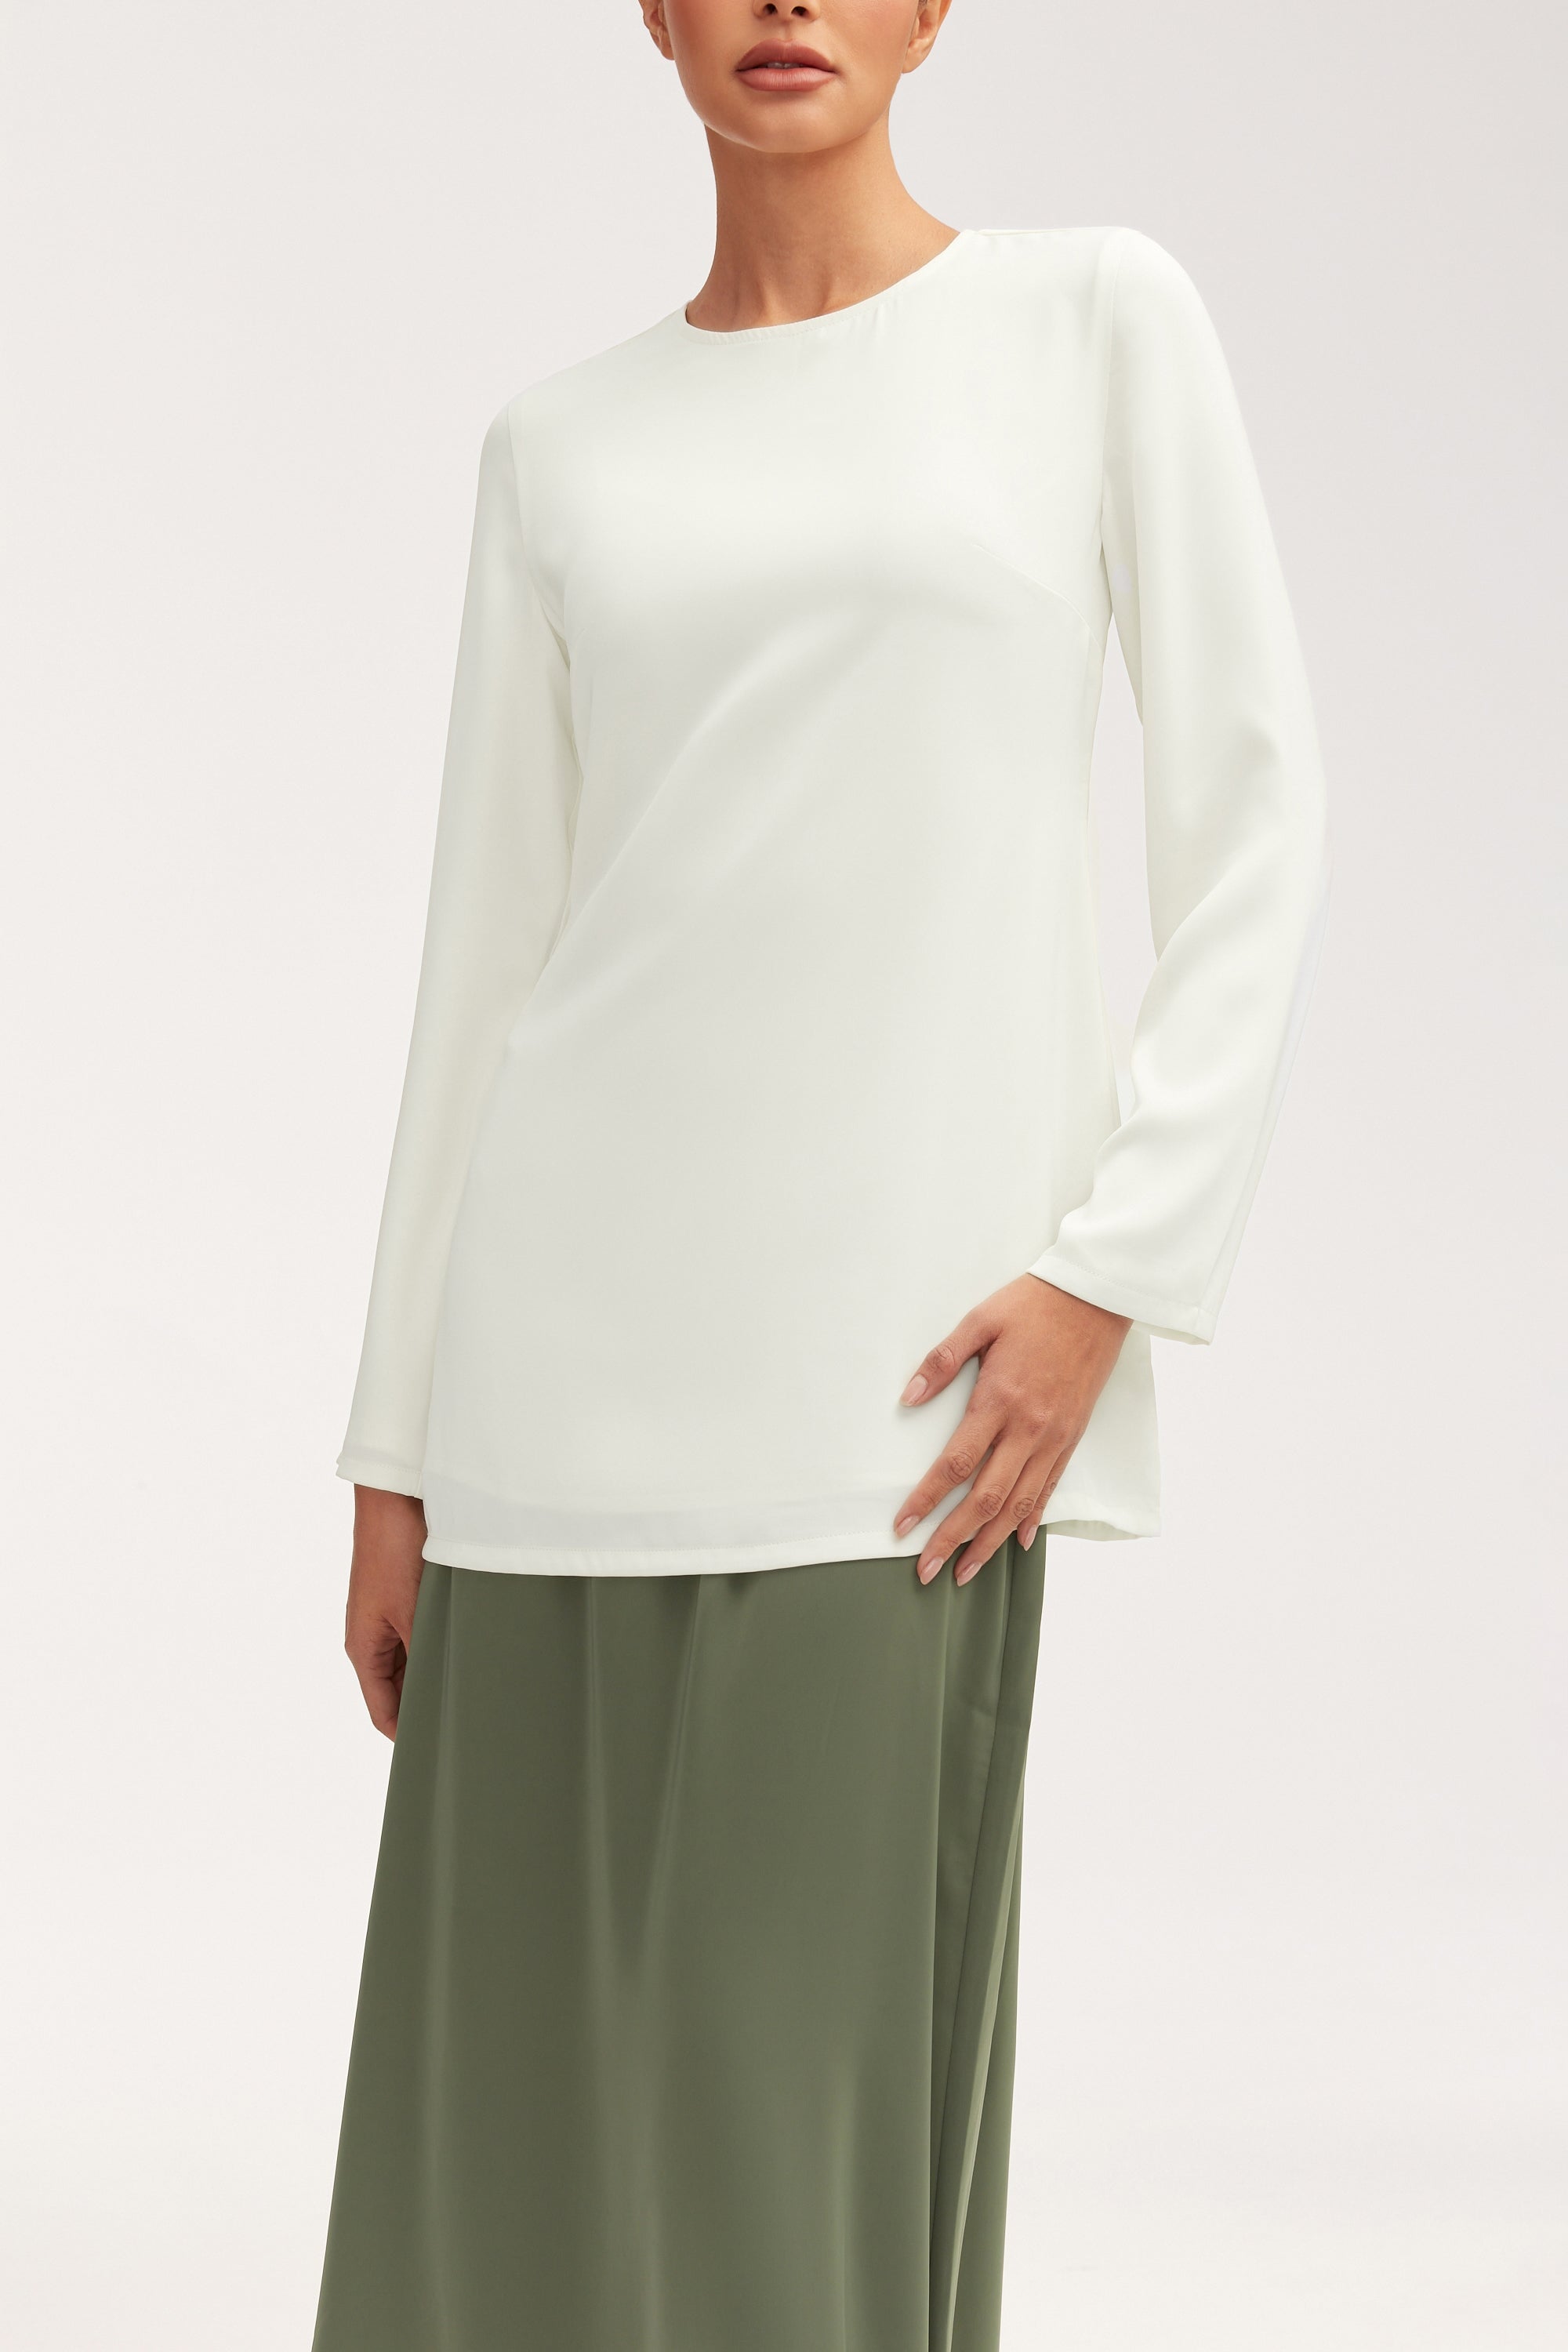 Amela Satin Top - Buttercream Clothing Veiled 